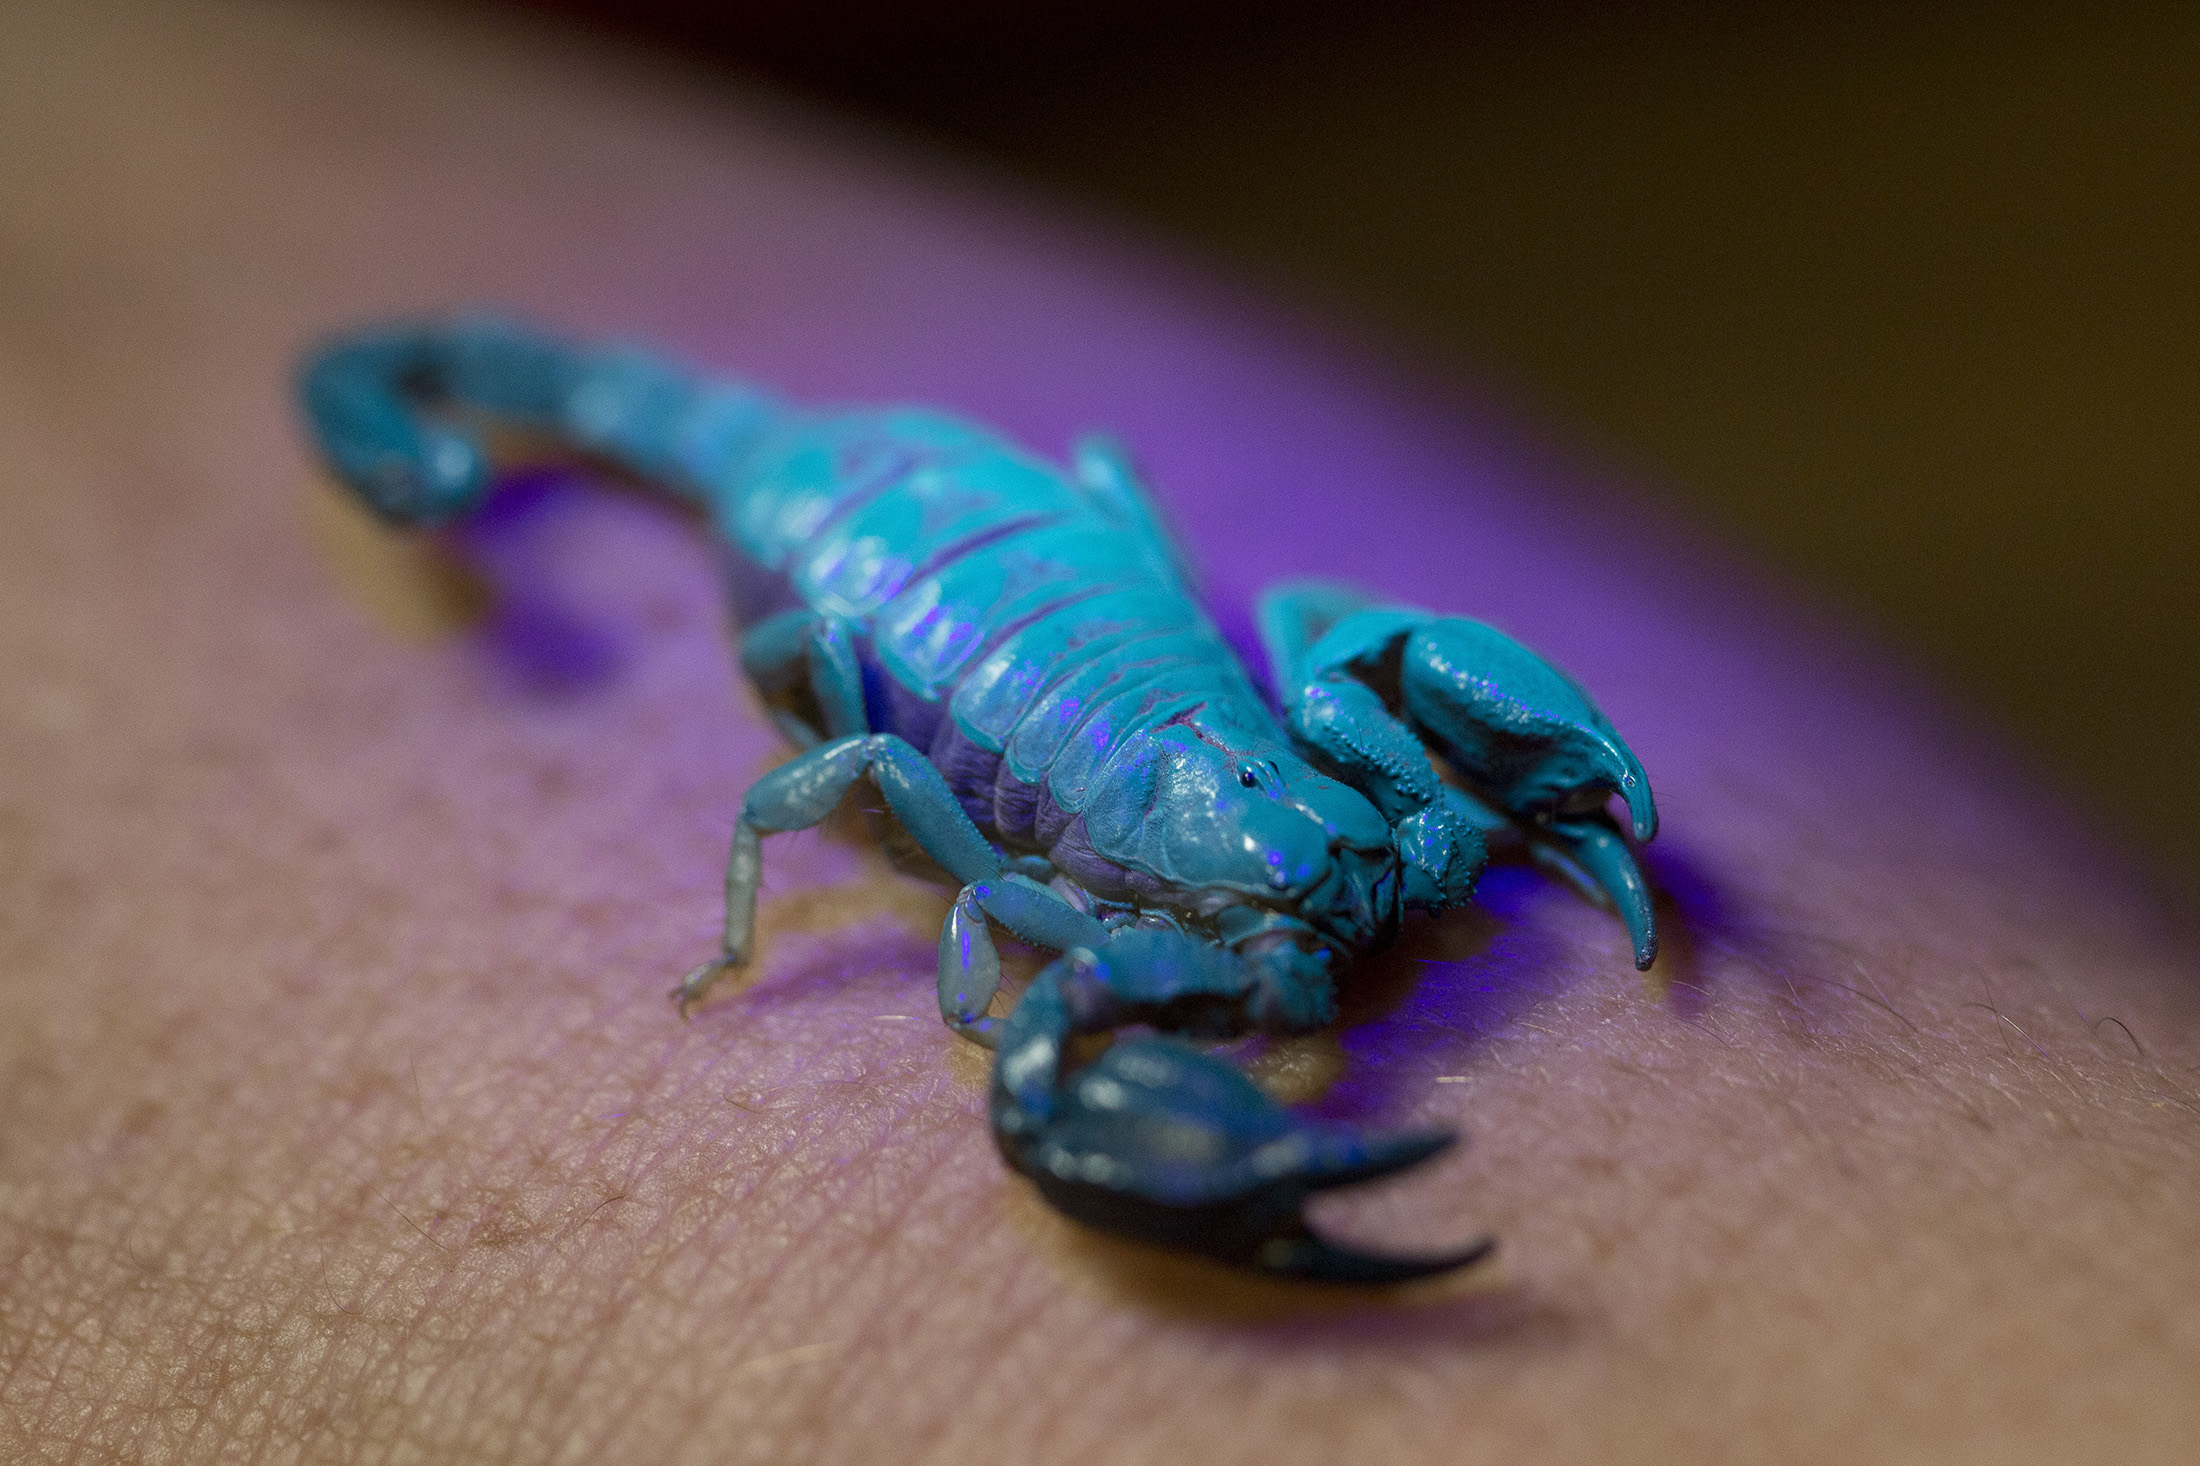 https://museumsvictoria.com.au/media/17997/little-marbled-scorpion-glowing.jpg